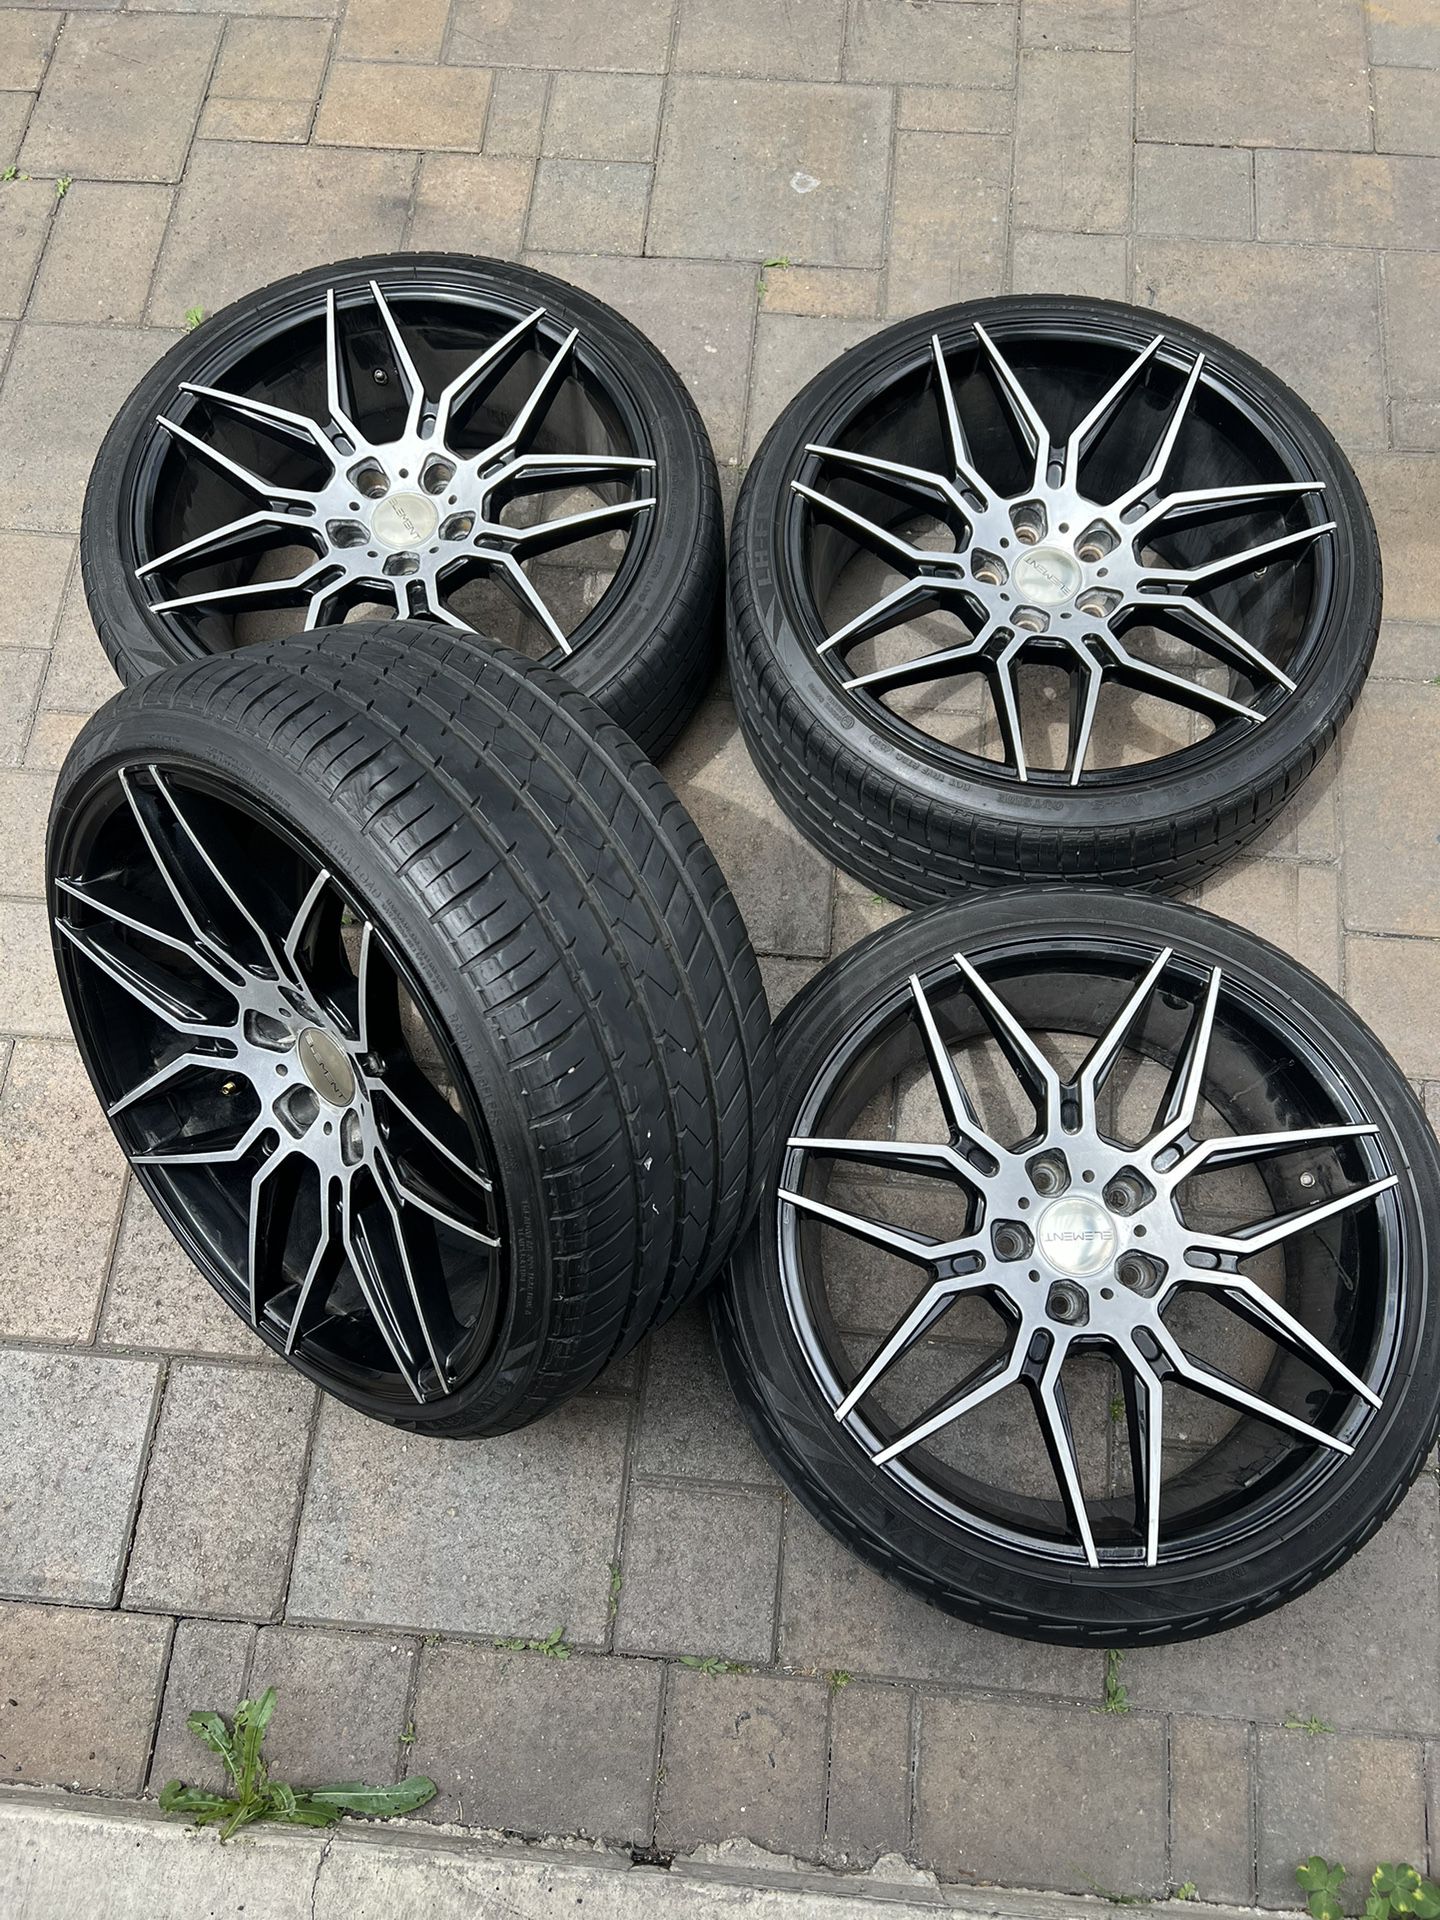 Black Gloss Racing Rims And Tires 5x114.3